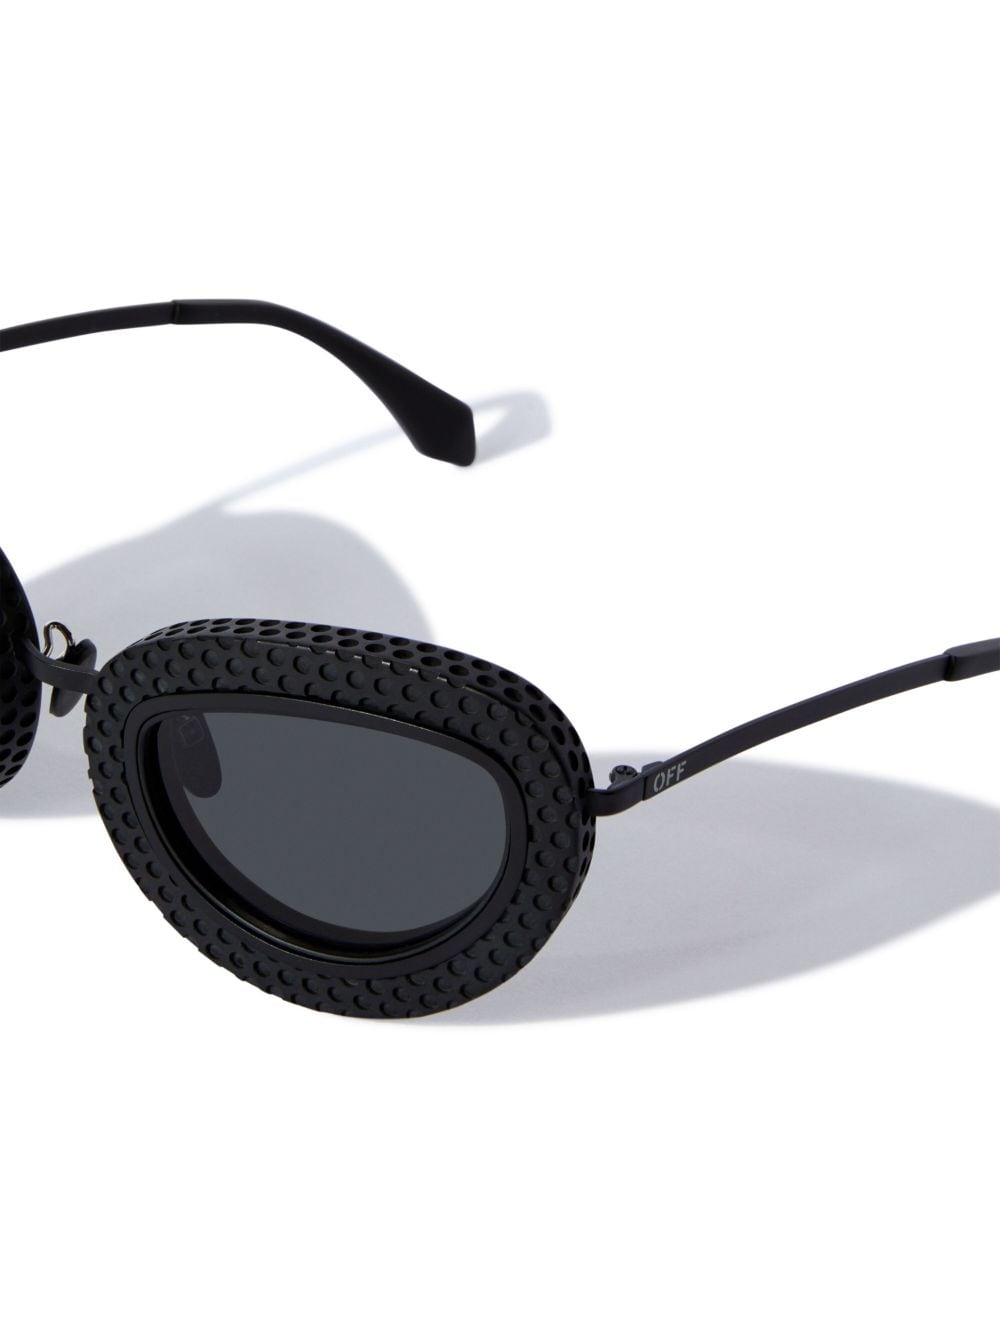 Off-White Tokyo zonnebril met cat-eye montuur - Zwart